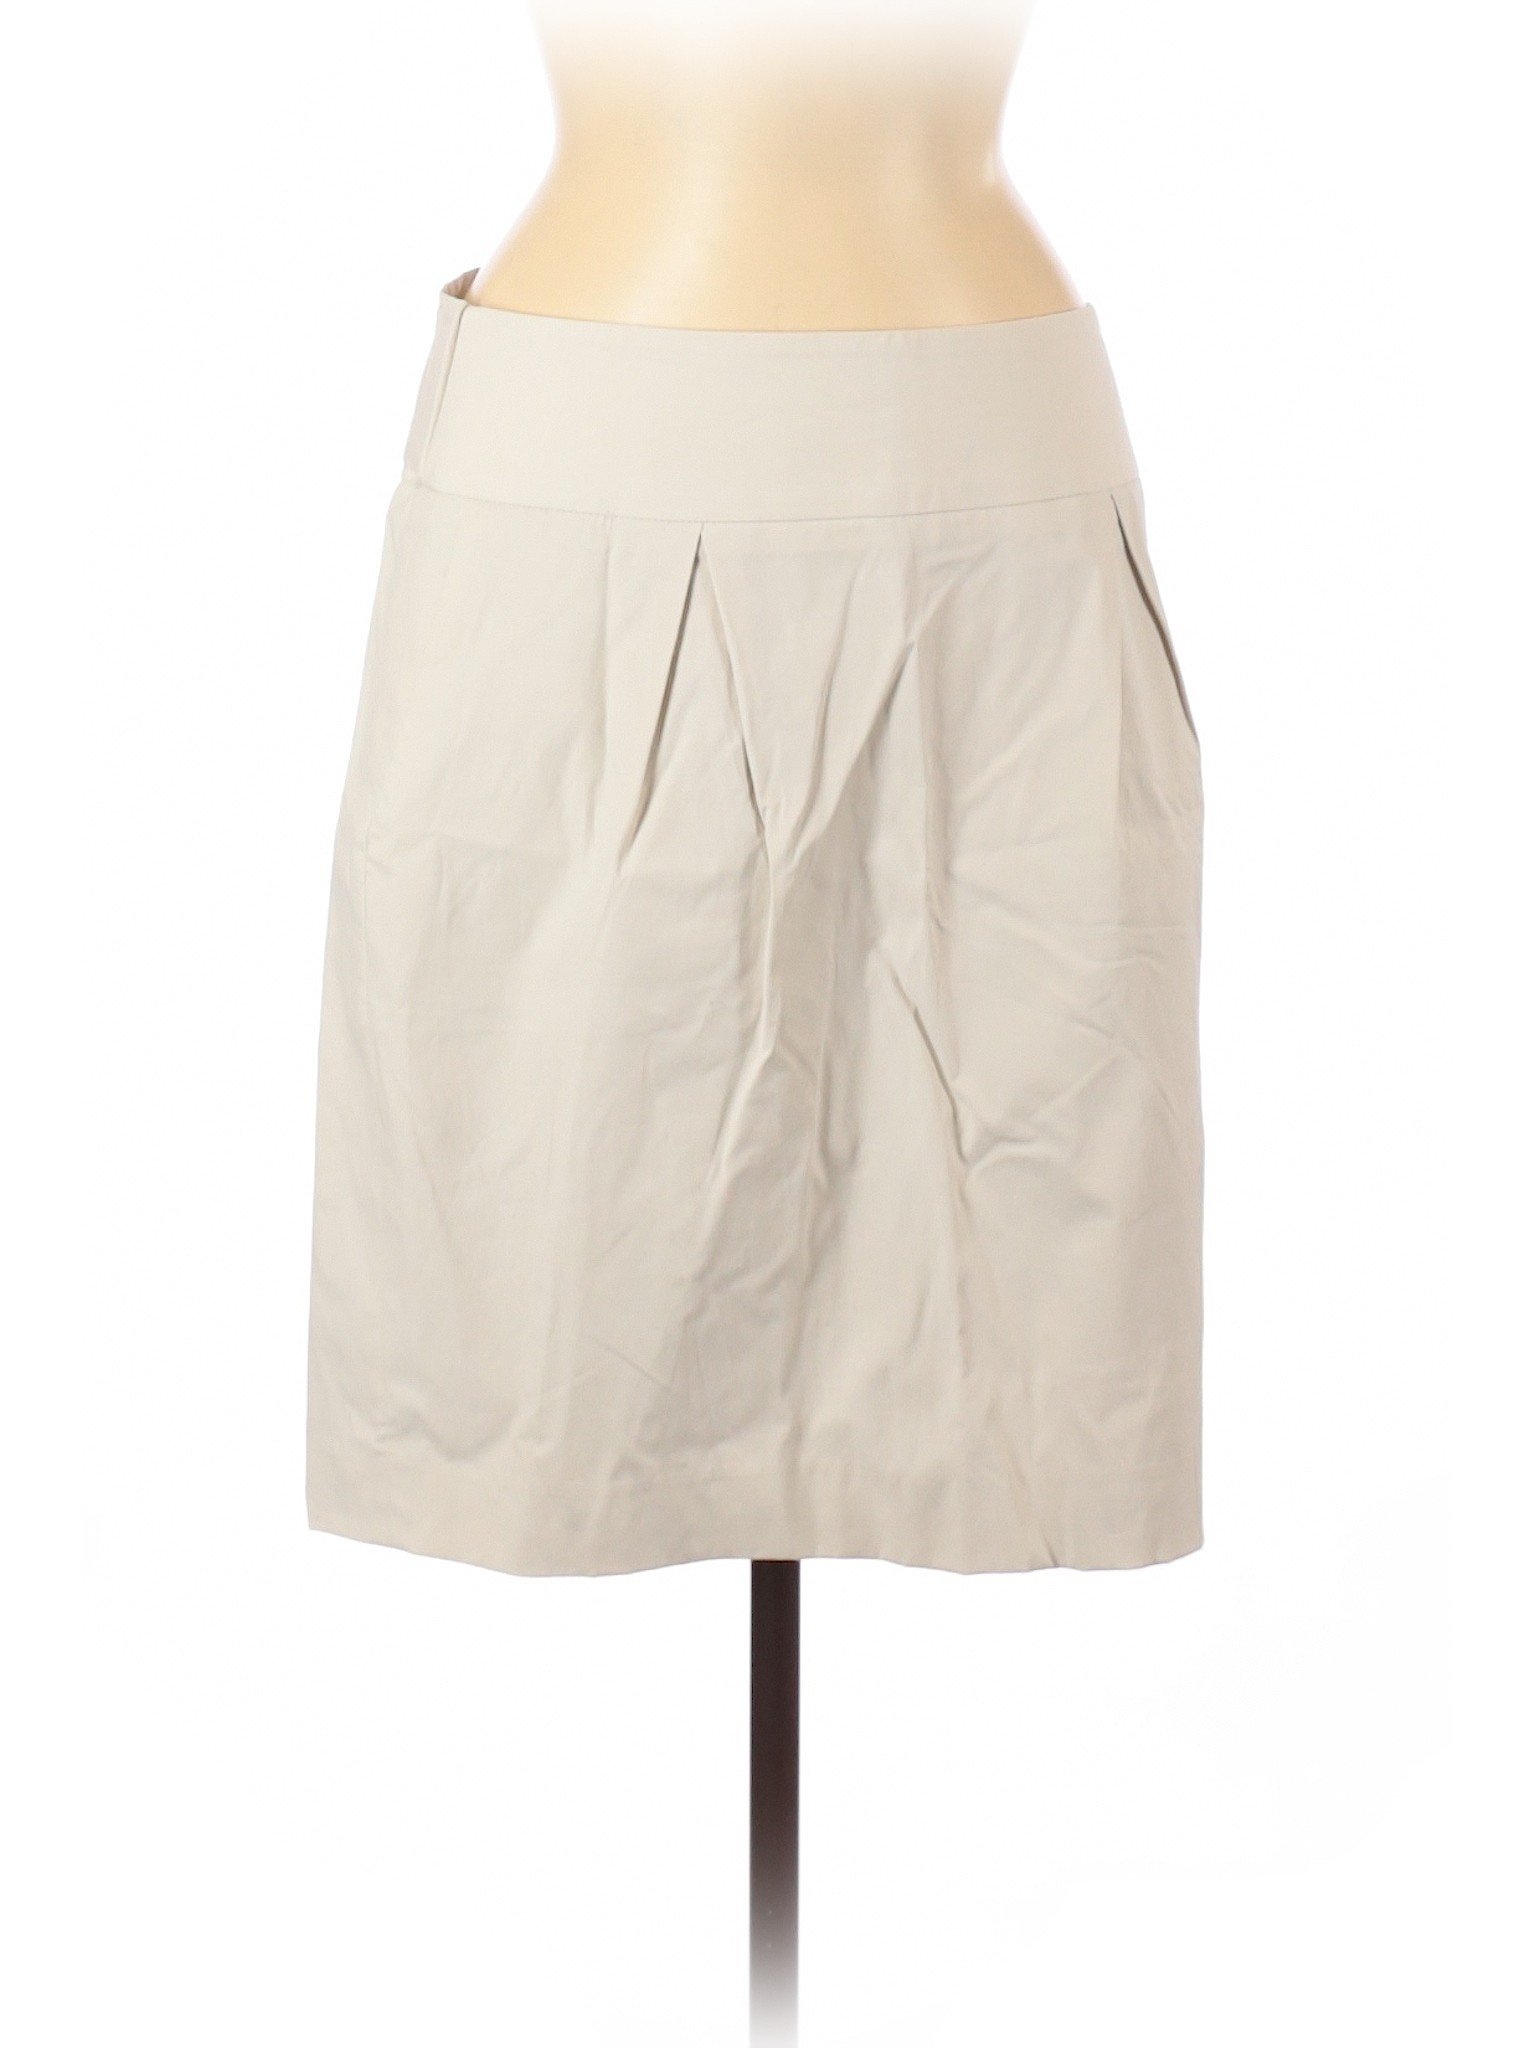 Banana Republic Women Ivory Casual Skirt 8 | eBay